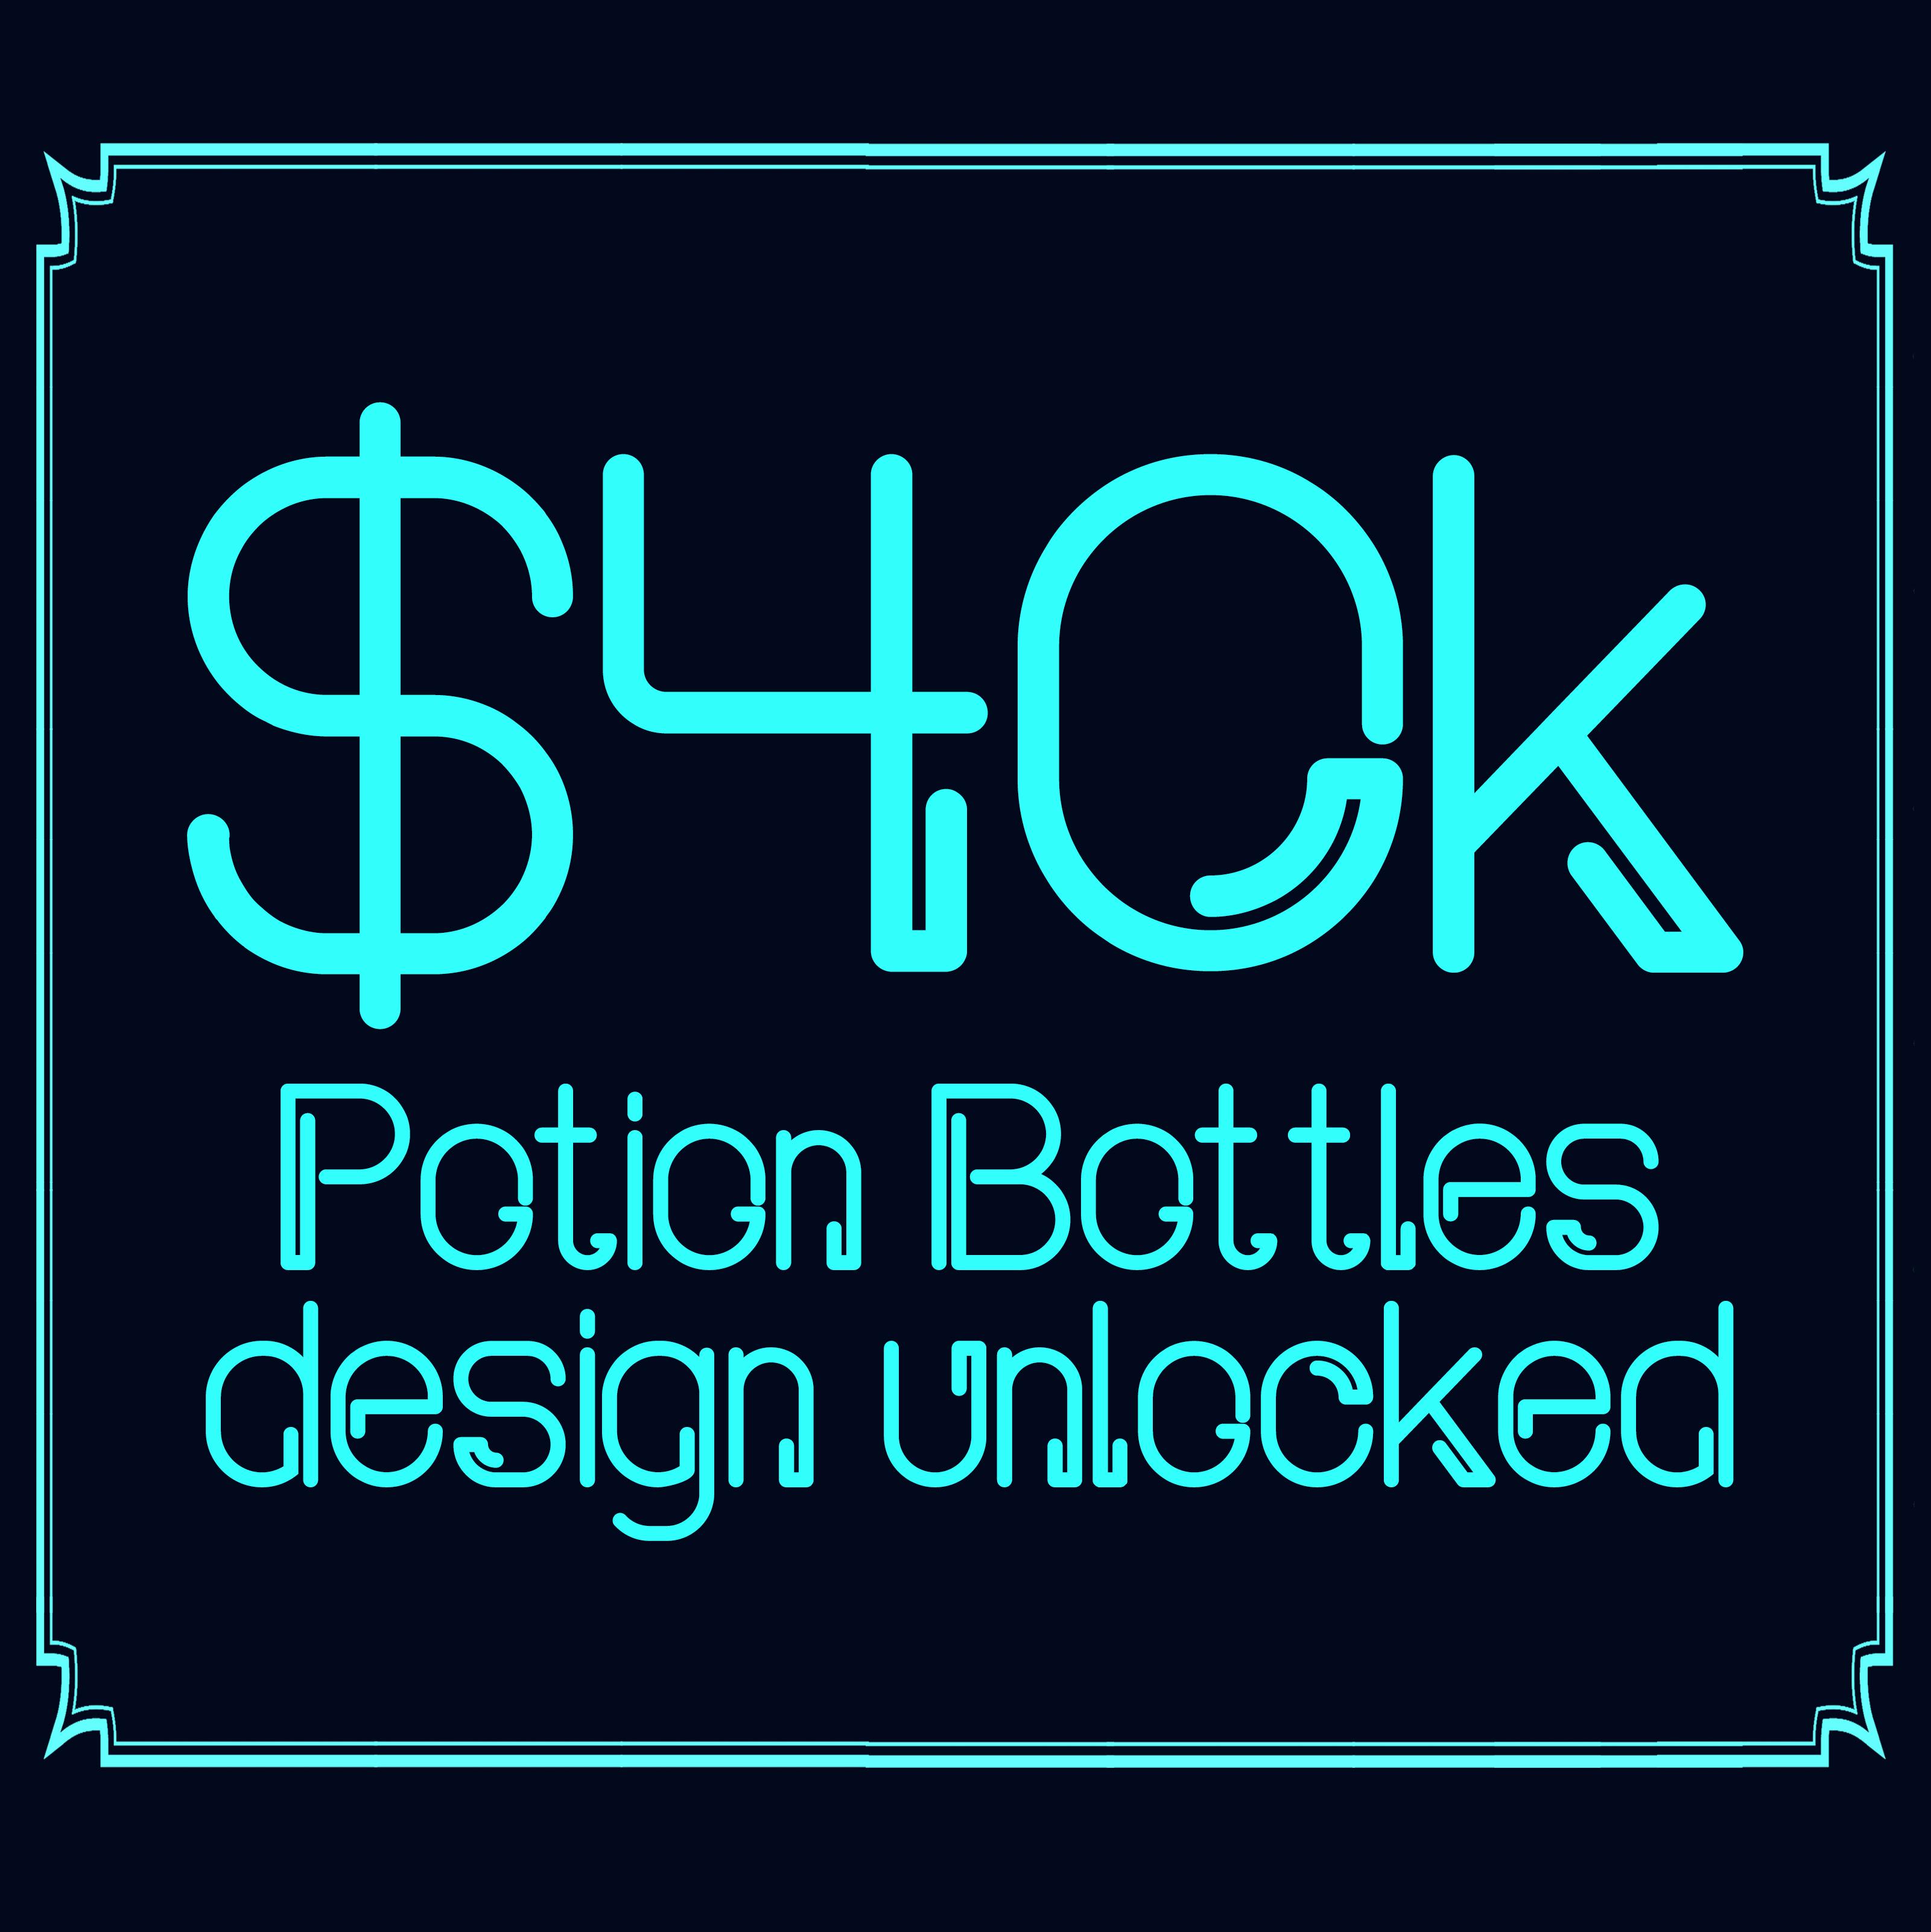 Potion Bottles design unlocked